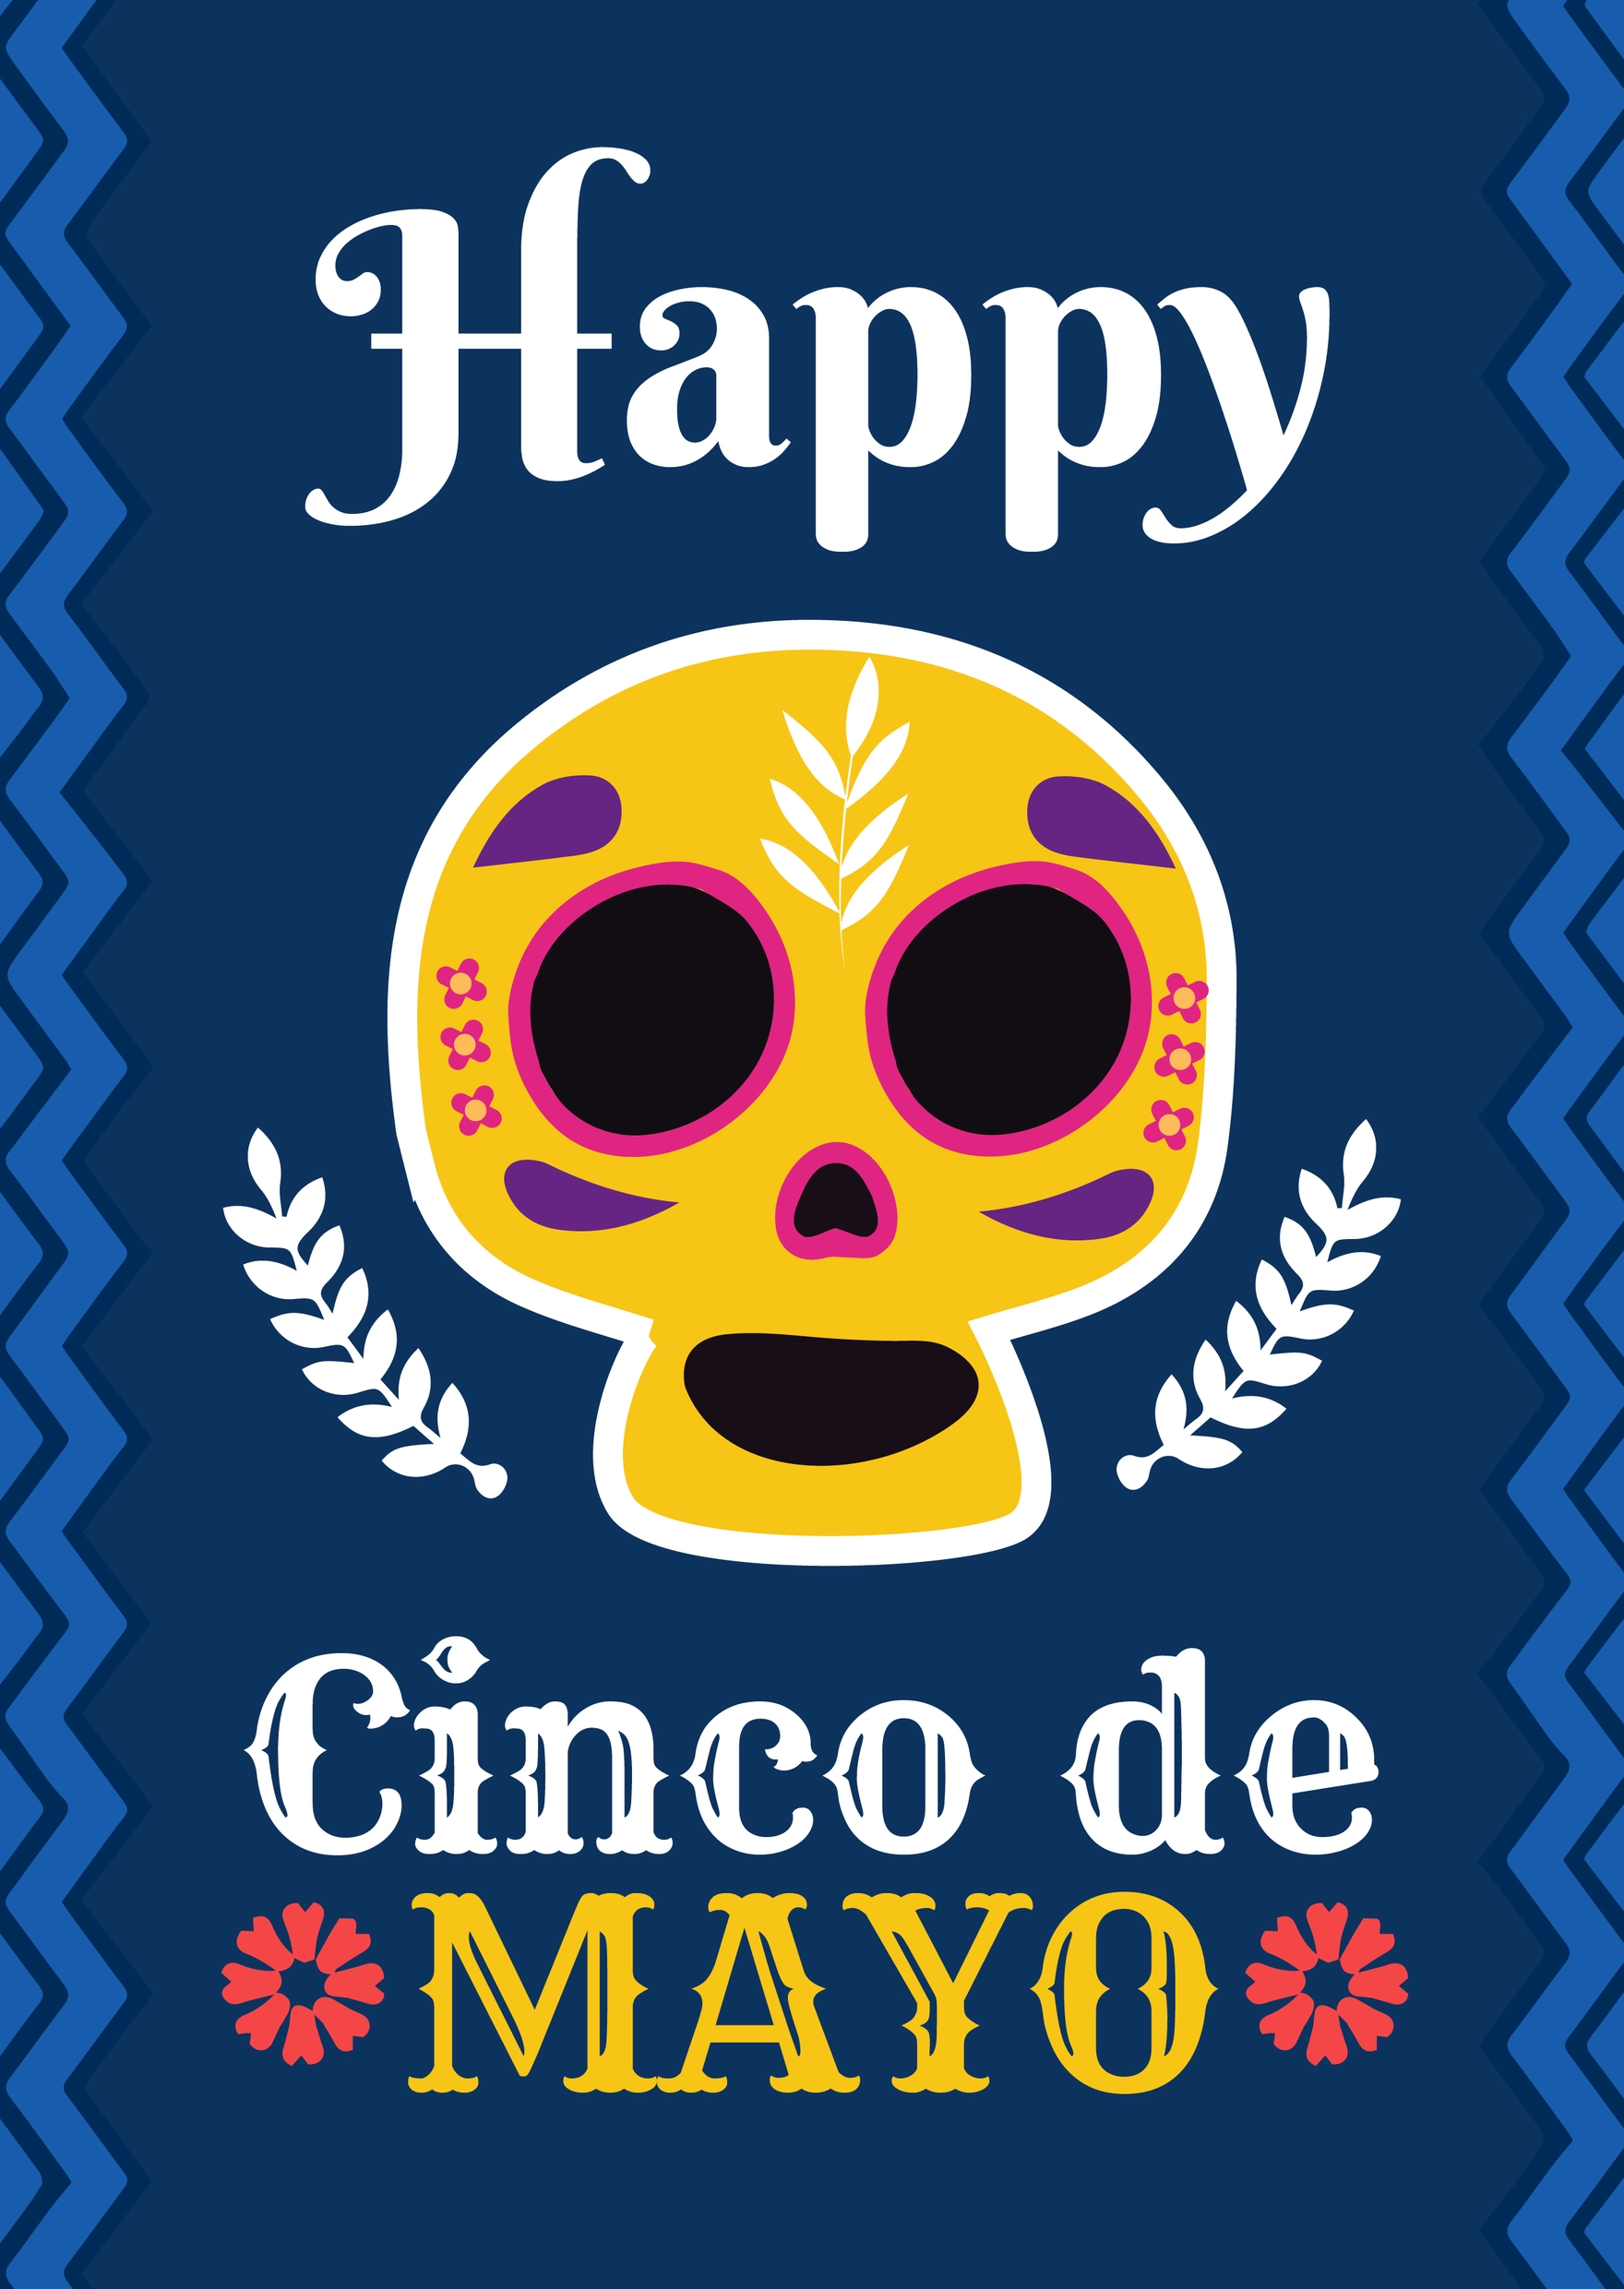 Happy Cinco De Mayo in Illustrator, EPS, SVG, JPG, PNG